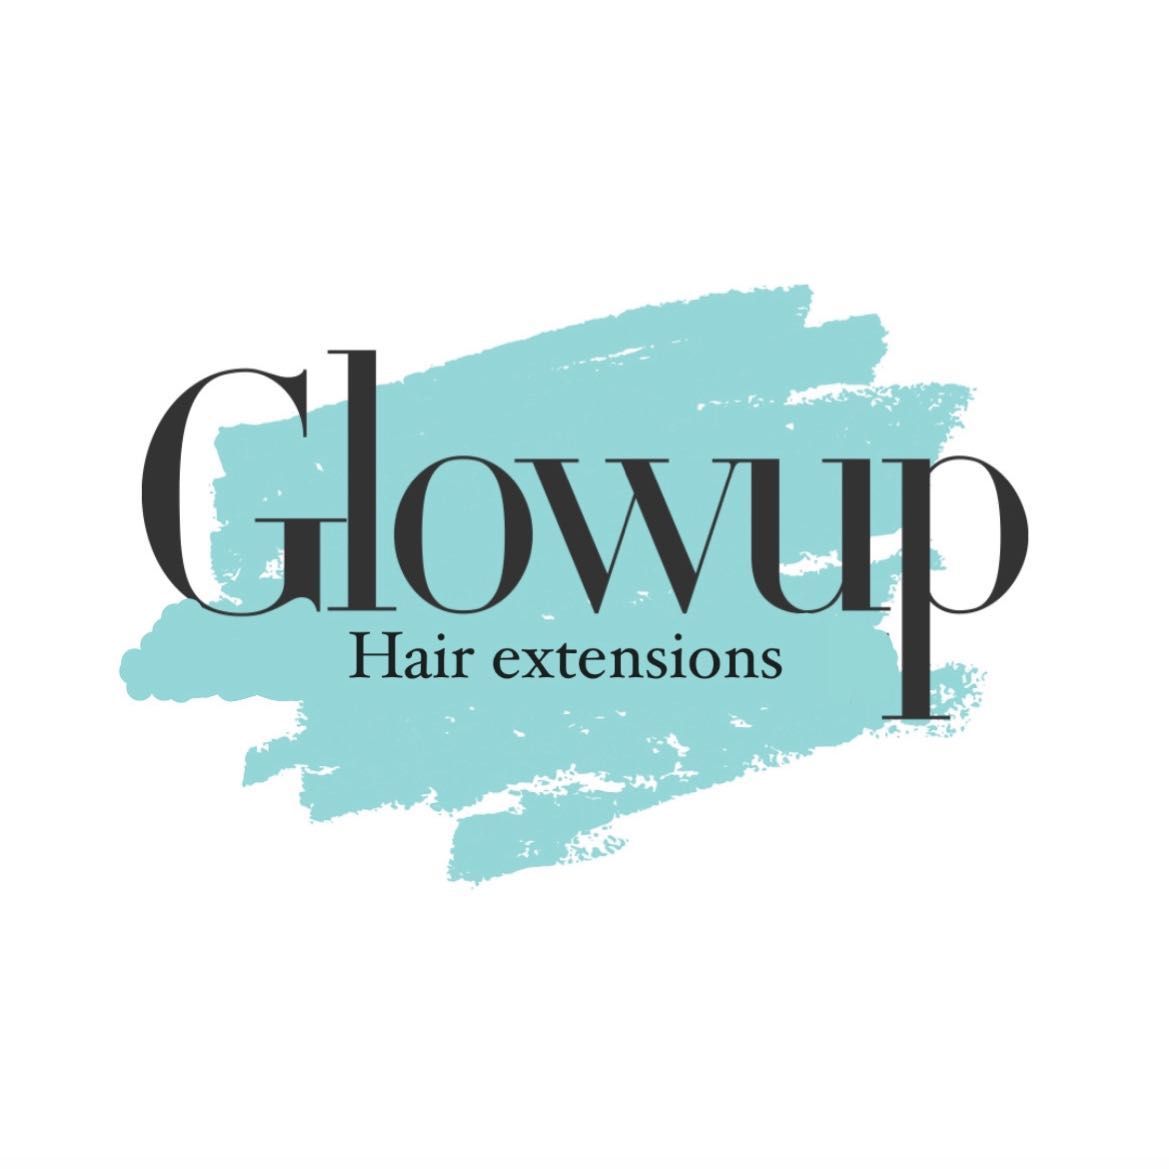 GLOW UP HAIR EXTENSIONS, 9309 S Orange Blossom Trl, Hotel Hair salon, Orlando, 32837